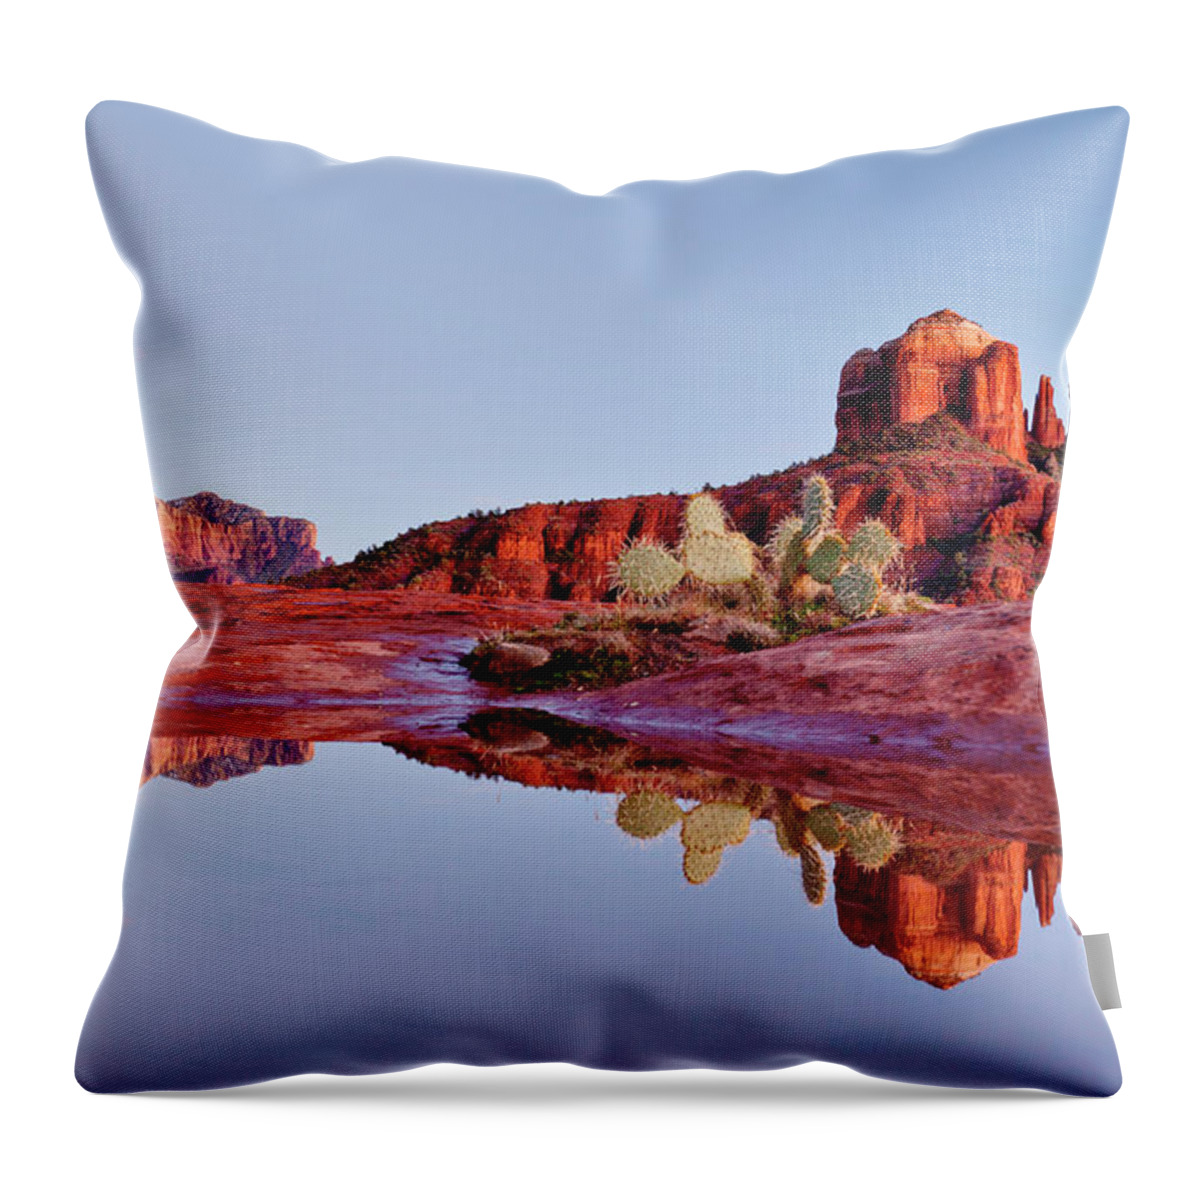 Scenics Throw Pillow featuring the photograph Sedona Arizona by Dougberry